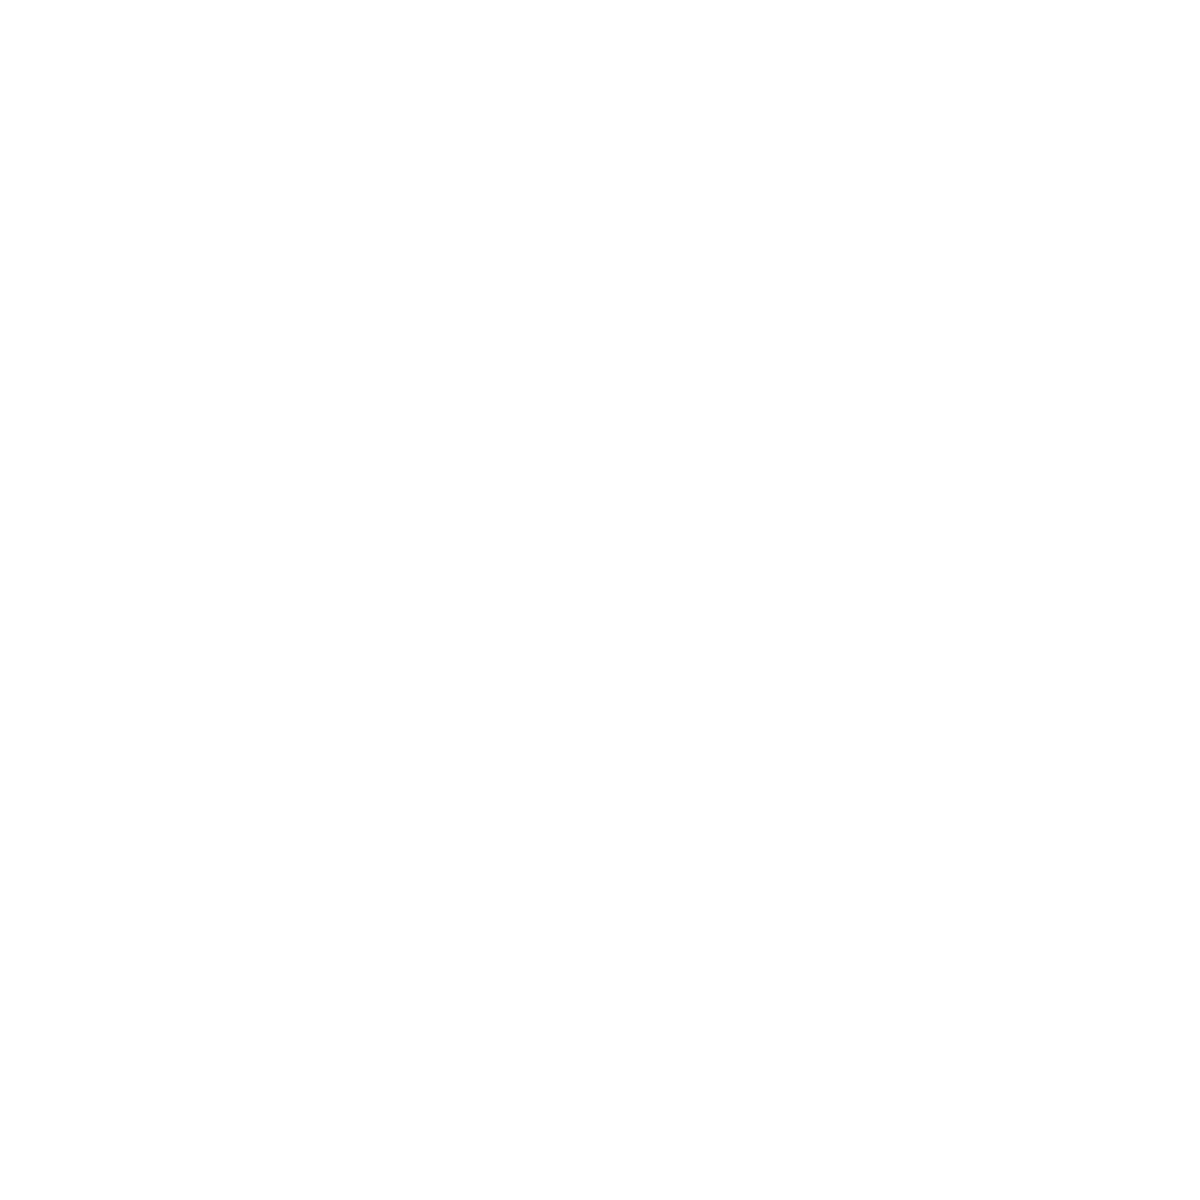 Internet logo